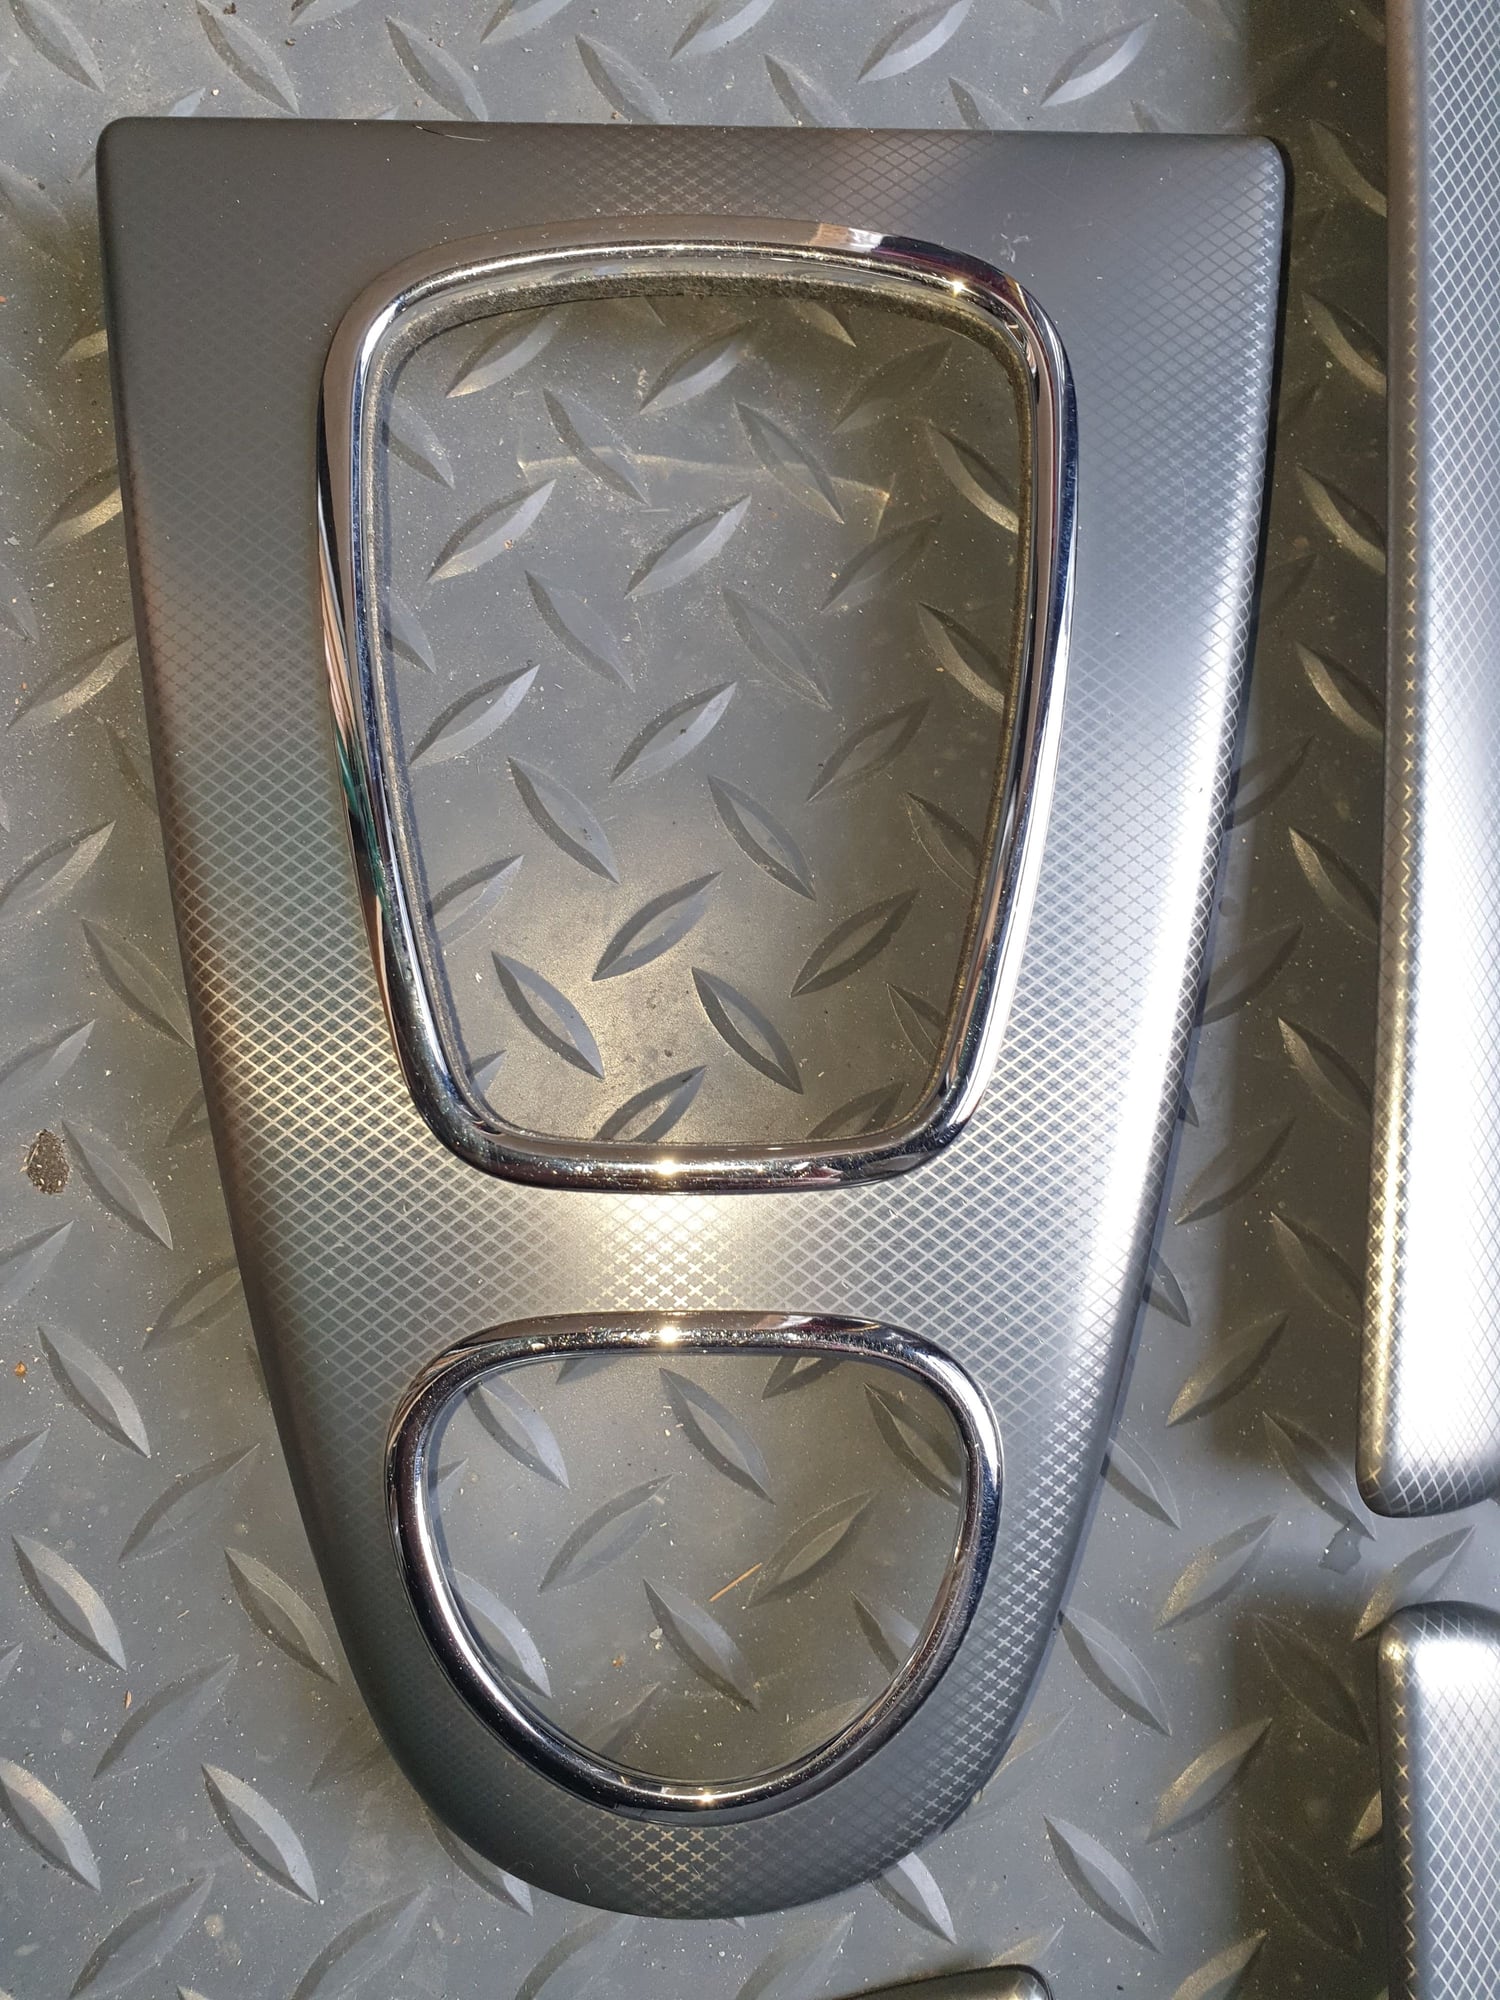 Interior/Upholstery - S Type Facelift Aluminium Dash and Door Trims - Used - 2002 to 2007 Jaguar S-Type - Didcot OX11 8, United Kingdom